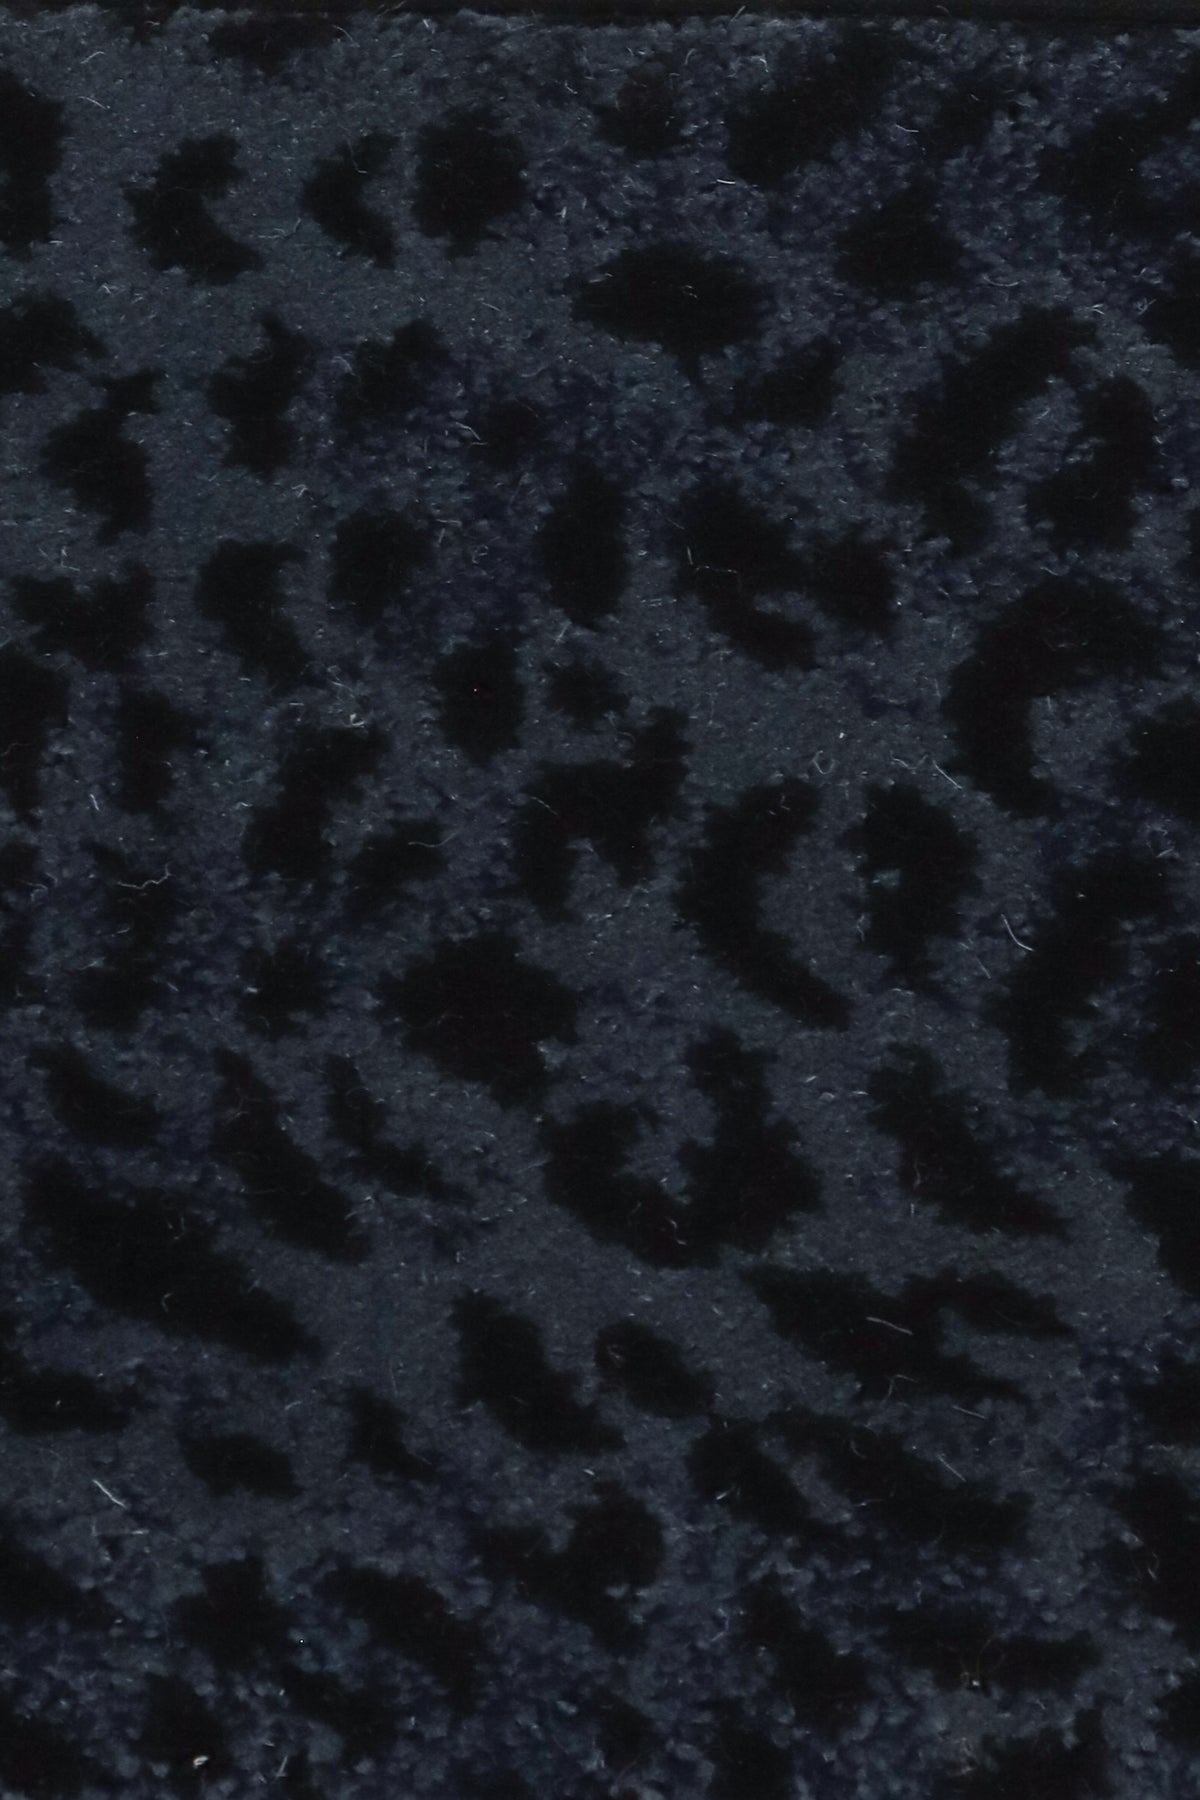 Black Leopard Fabric -  Canada